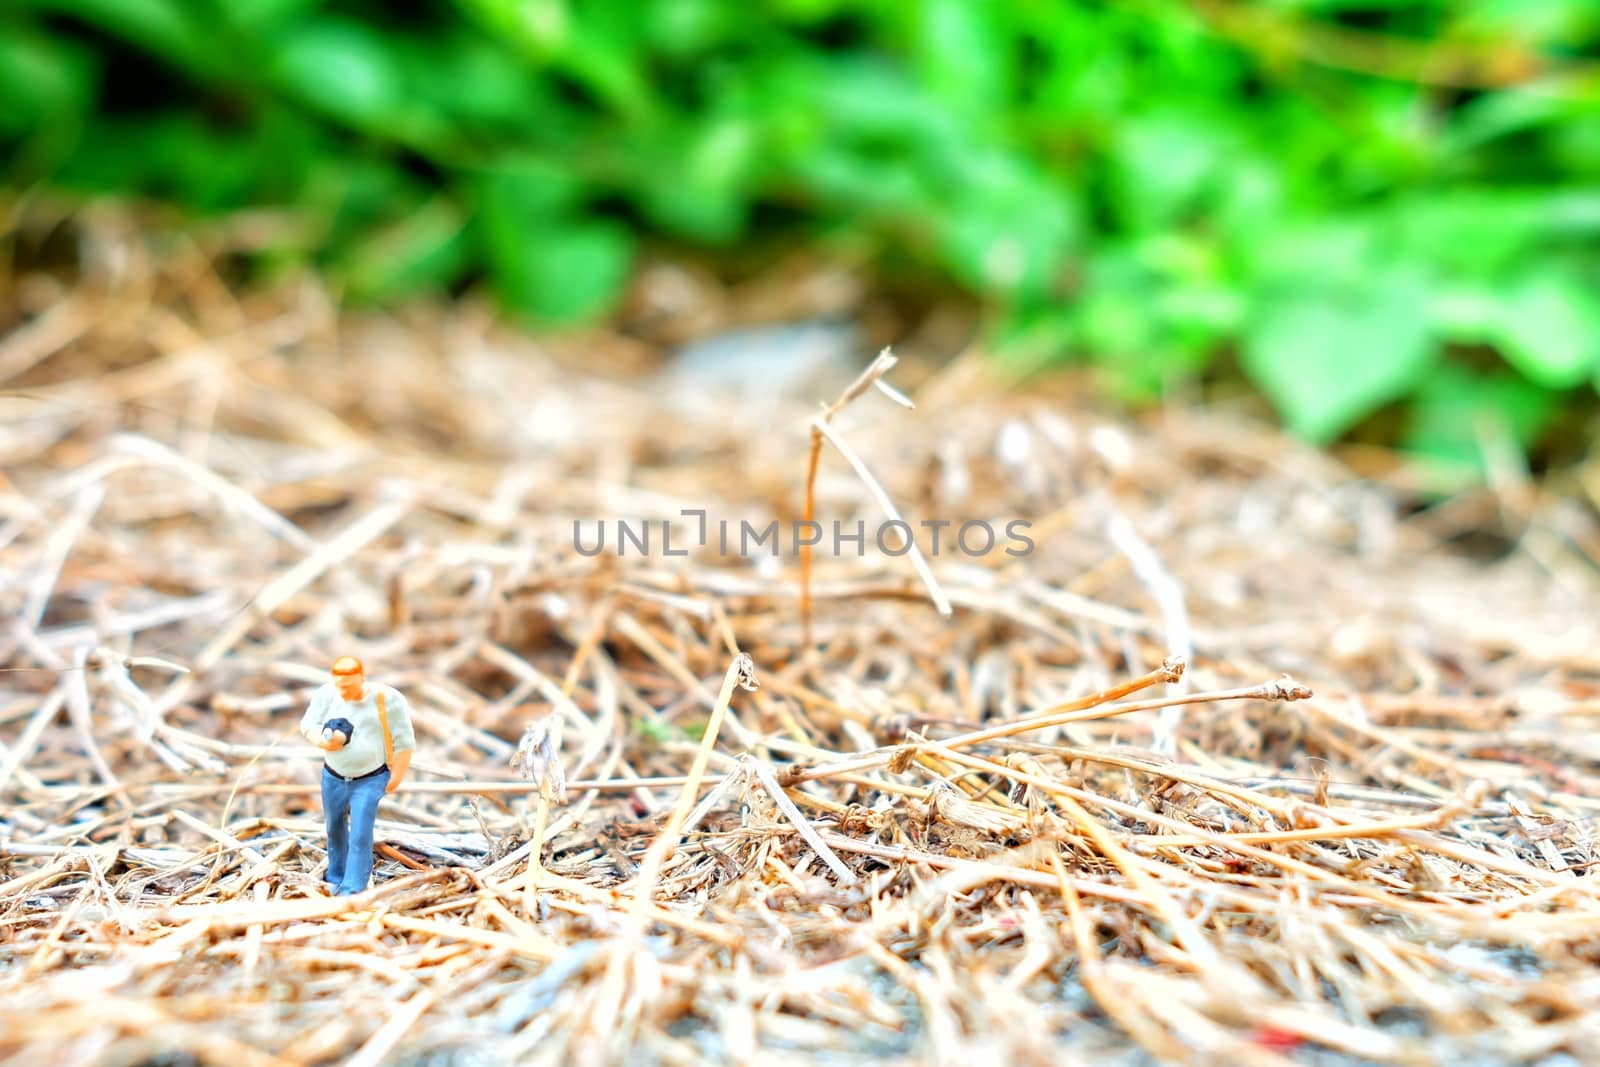 Miniature Figure Photographer Walking in Dried Grass.